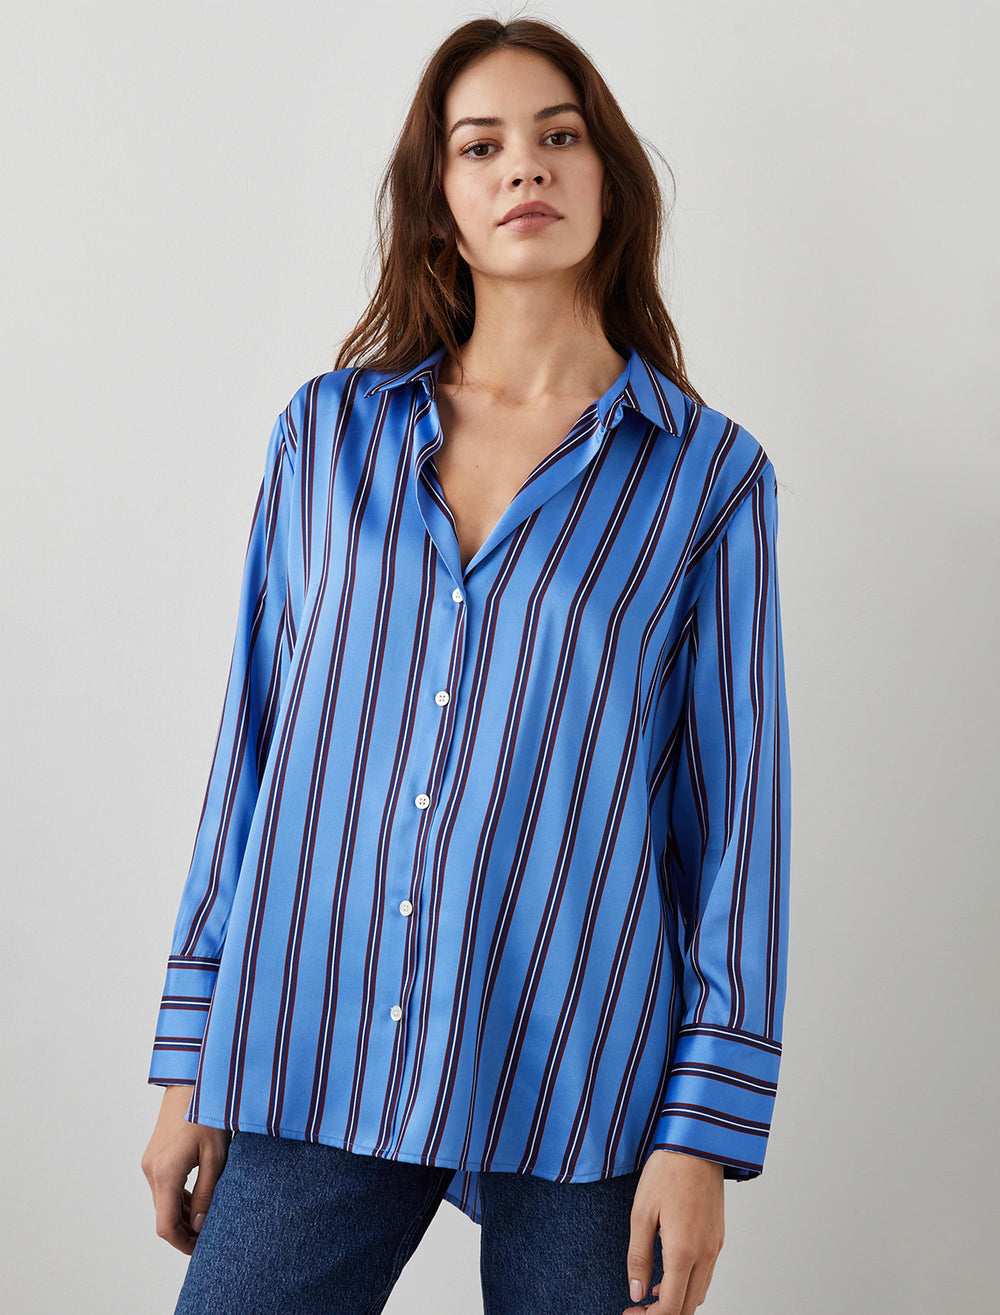 Model wearing Rails' dorian blouse in primrose stripe.